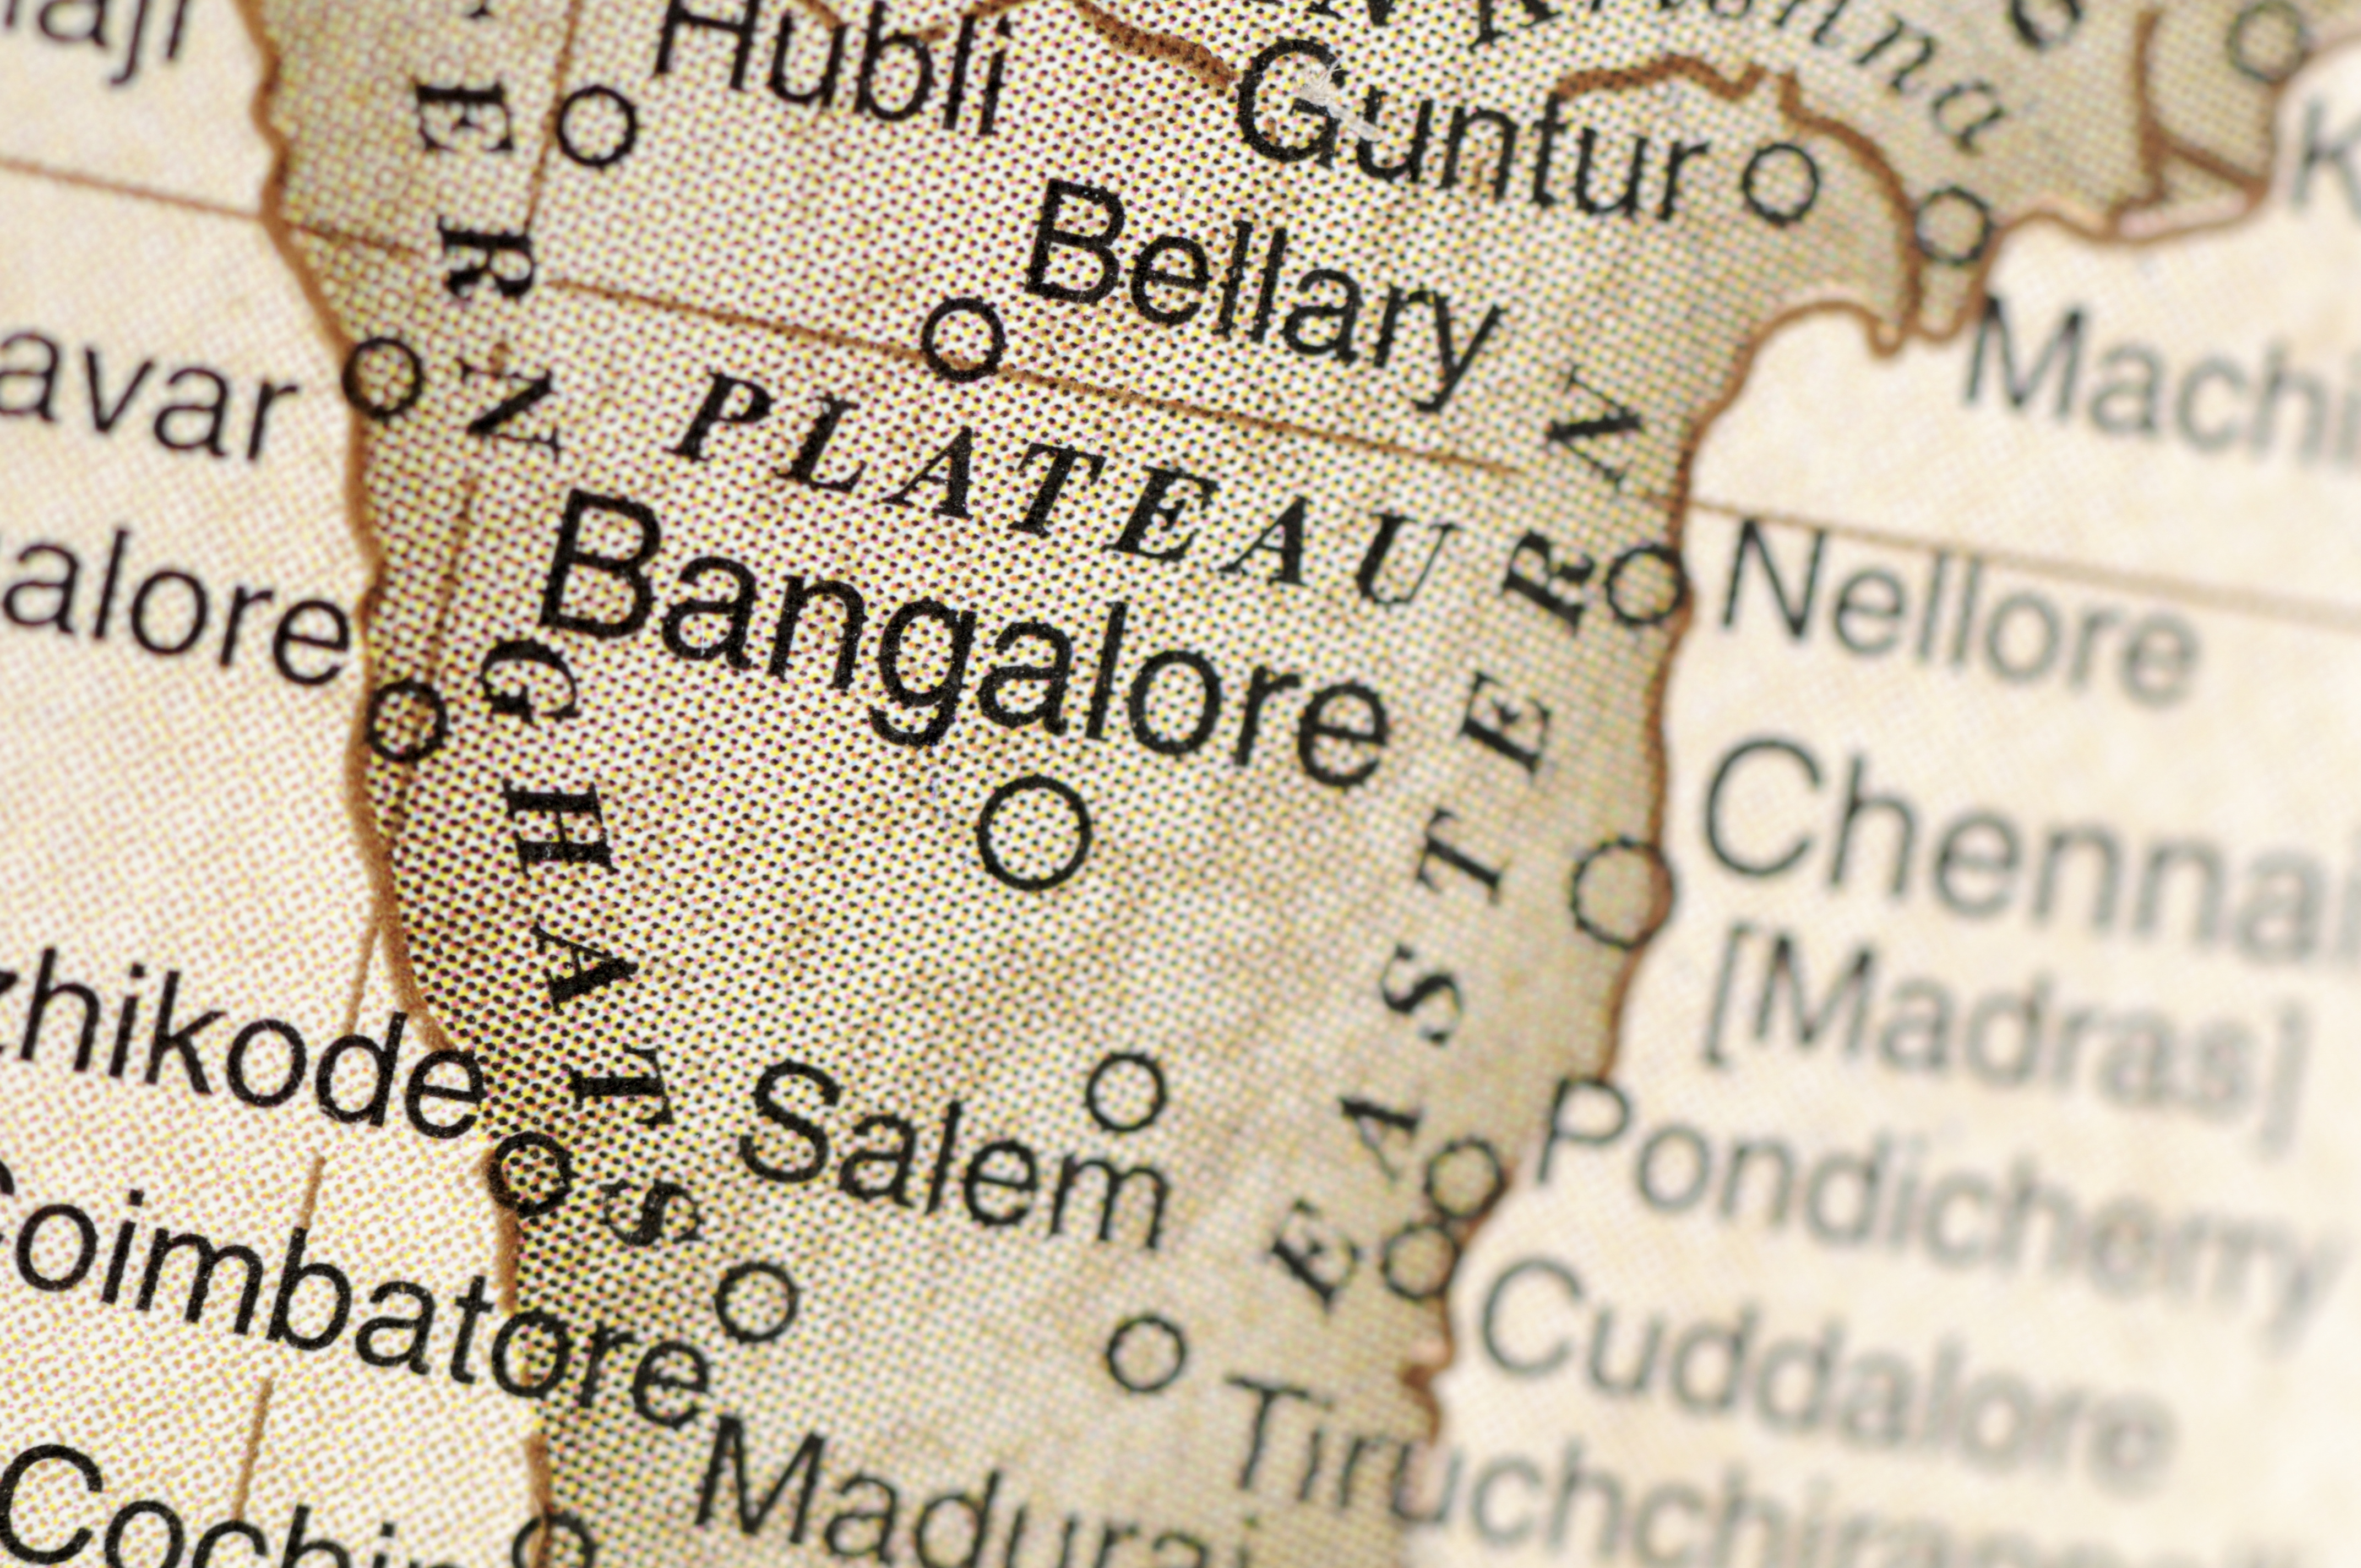 Banglalore map